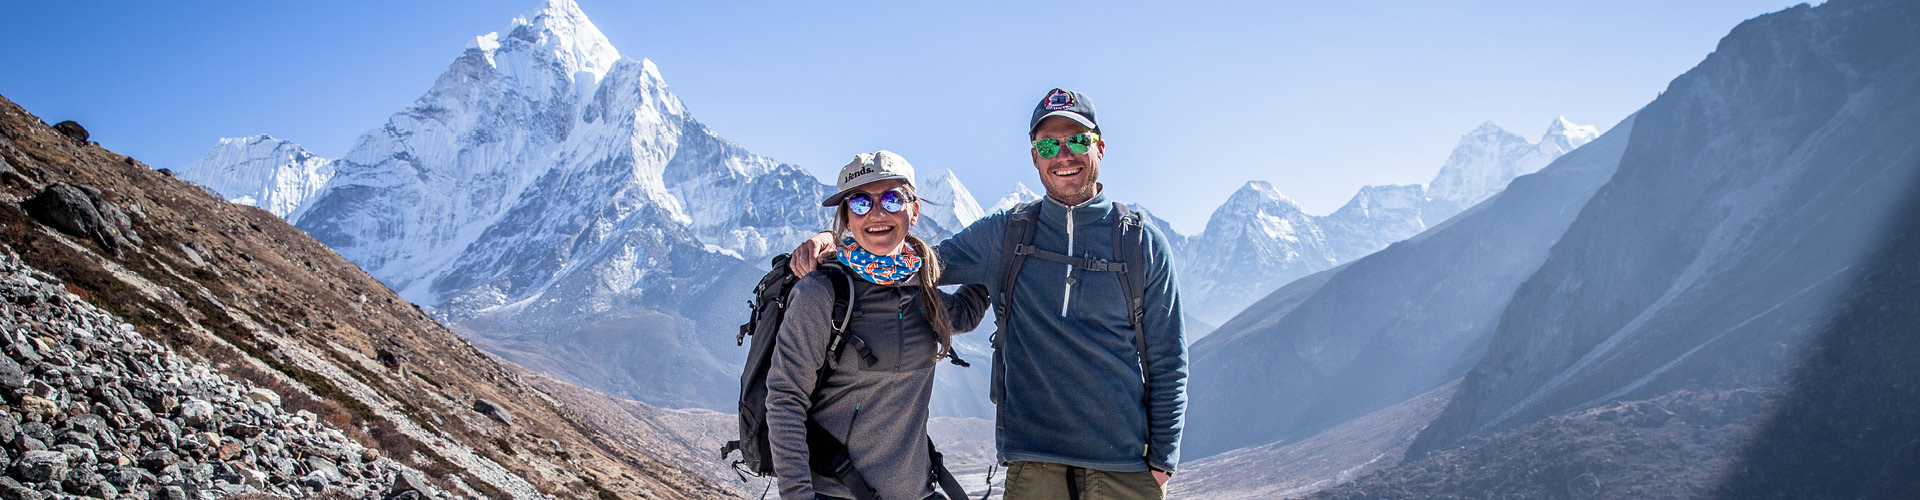 Everest Base Camp Trek - Southall Travel